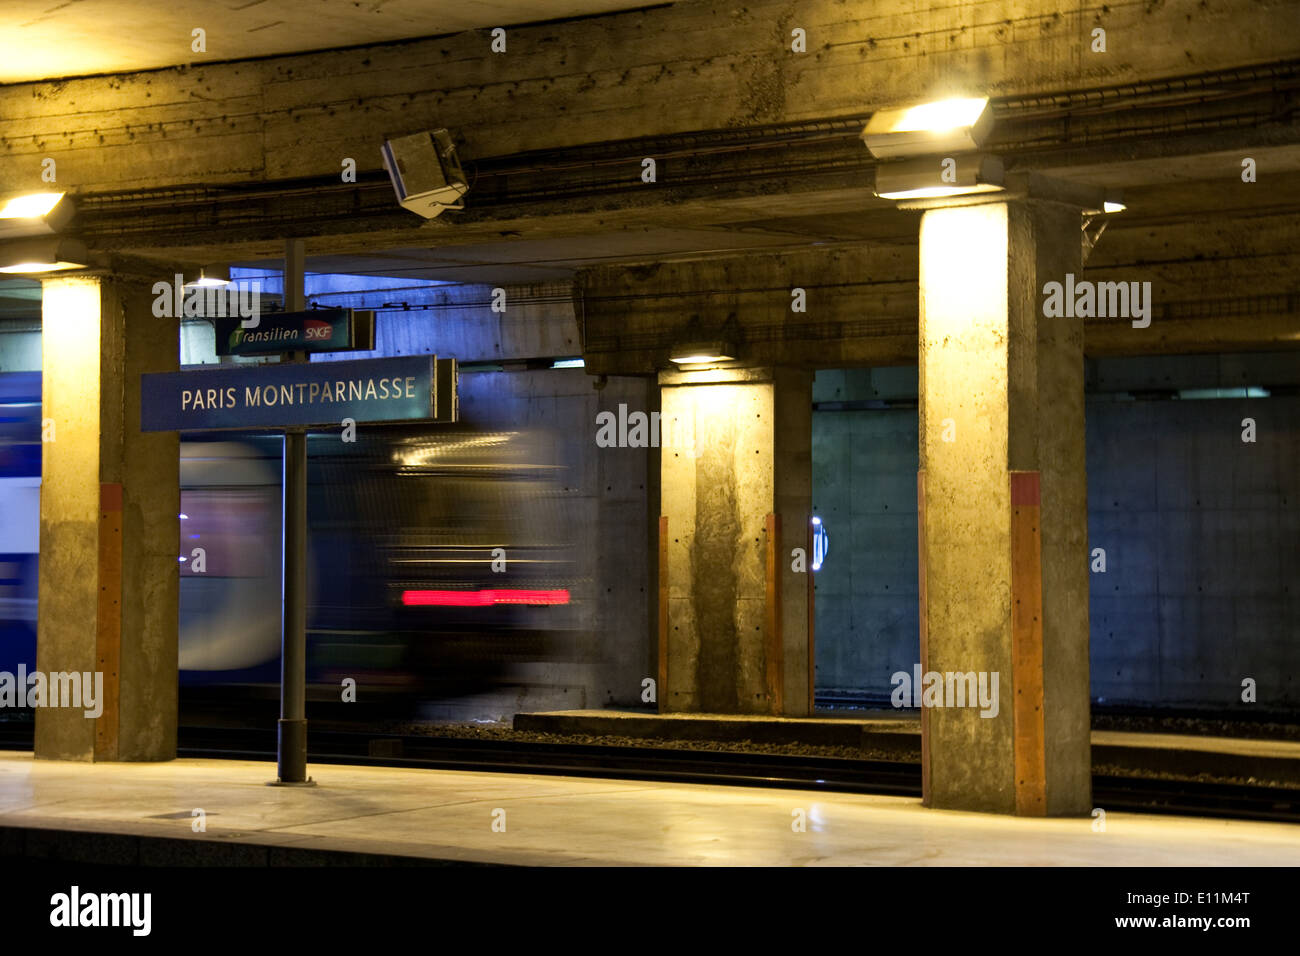 Eisenbahn im Bahnhof Montparnasse, Paris, Frankreich - Train in Montparnasse Station, Paris, France Stock Photo